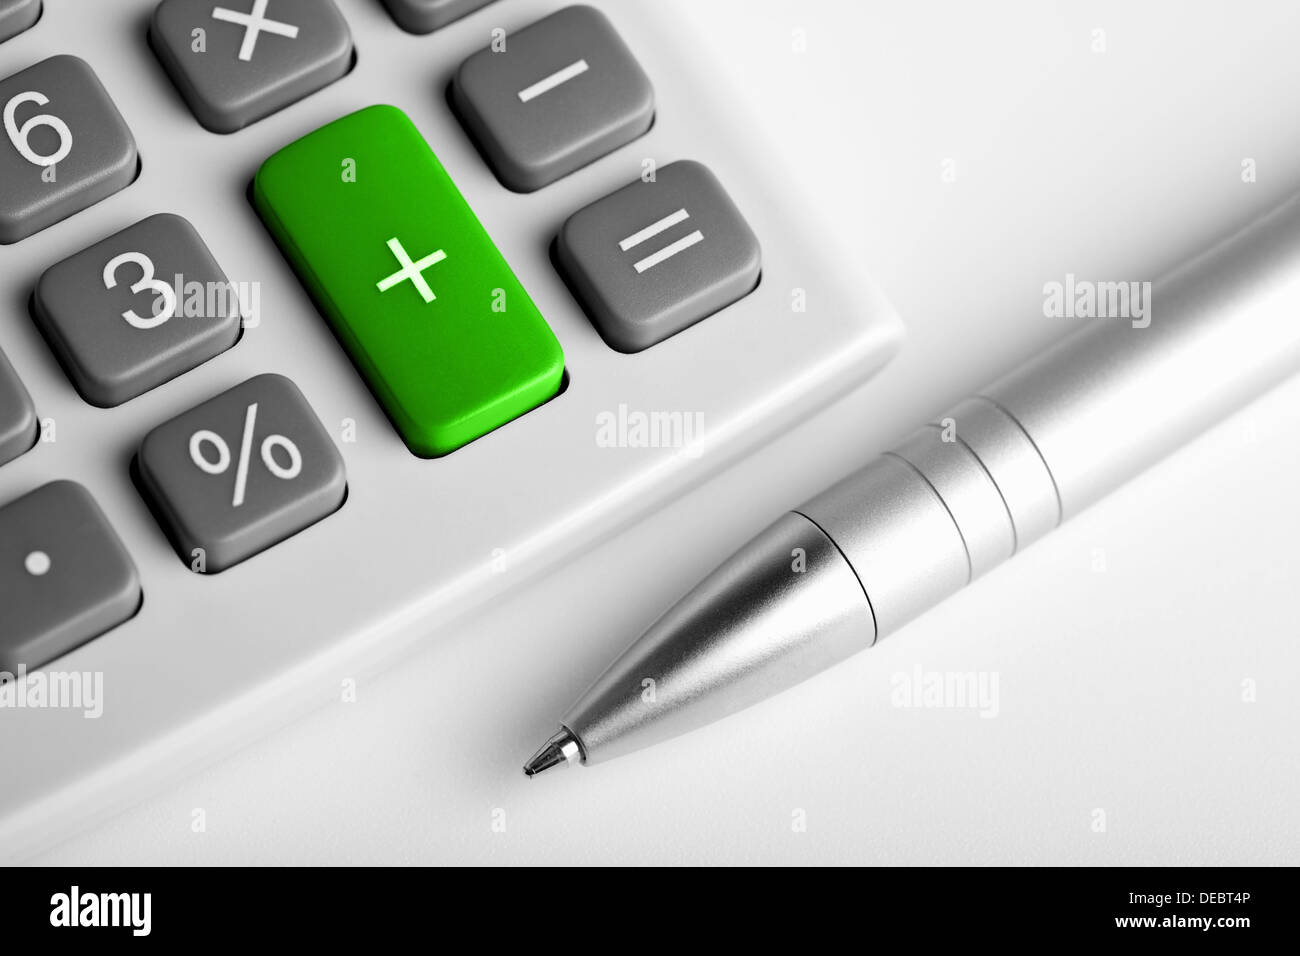 calculator and pen. plus button colored green Stock Photo